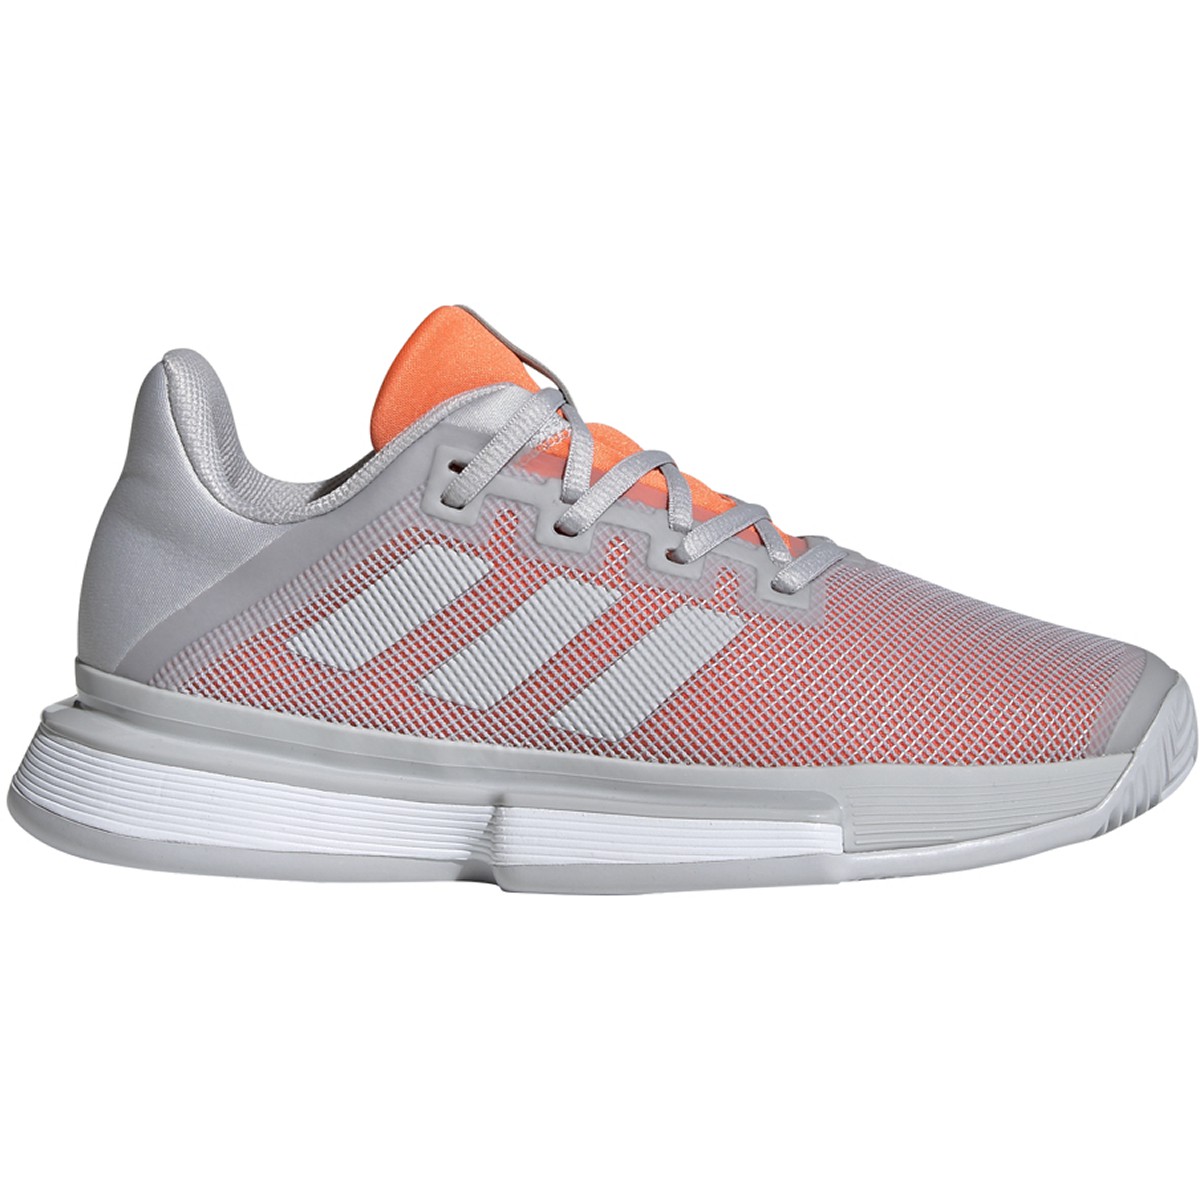 light grey tennis shoes